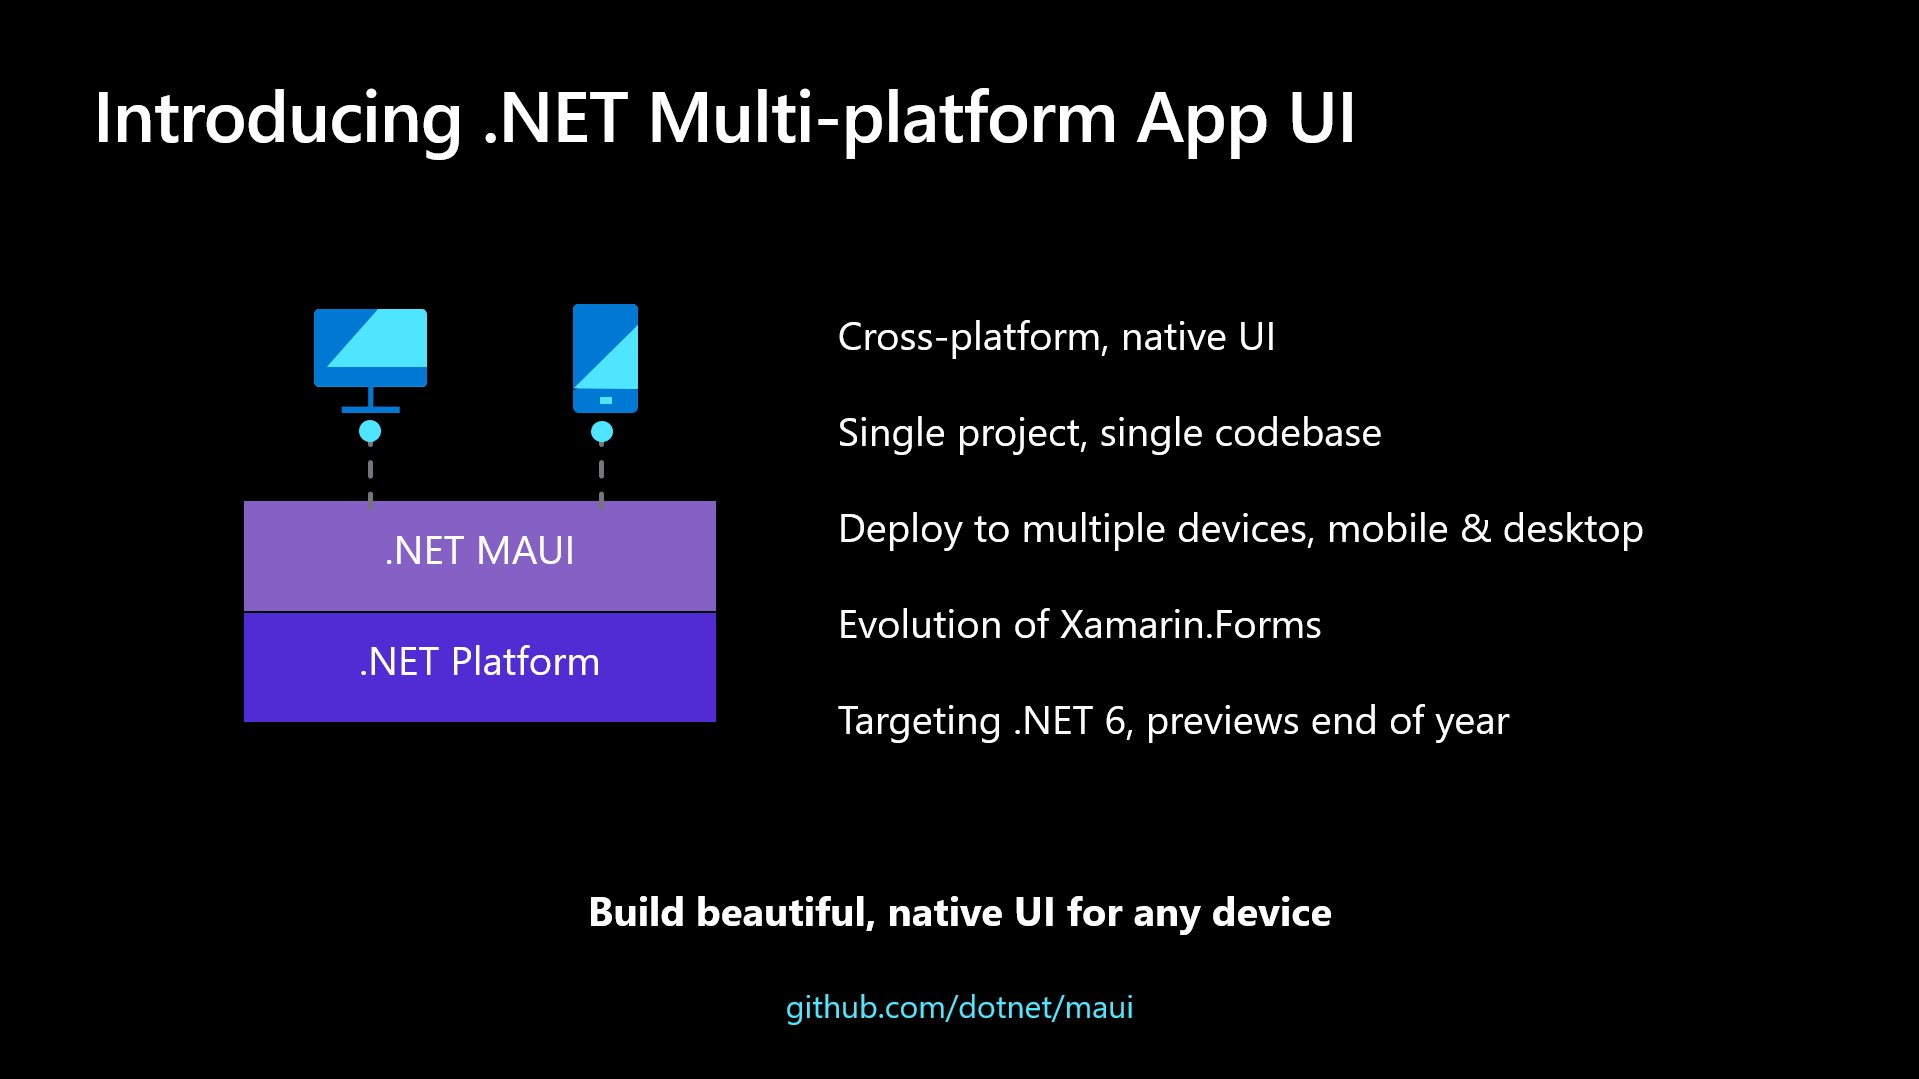 GitHub - dotnet/maui: .NET MAUI is the .NET Multi-platform App UI